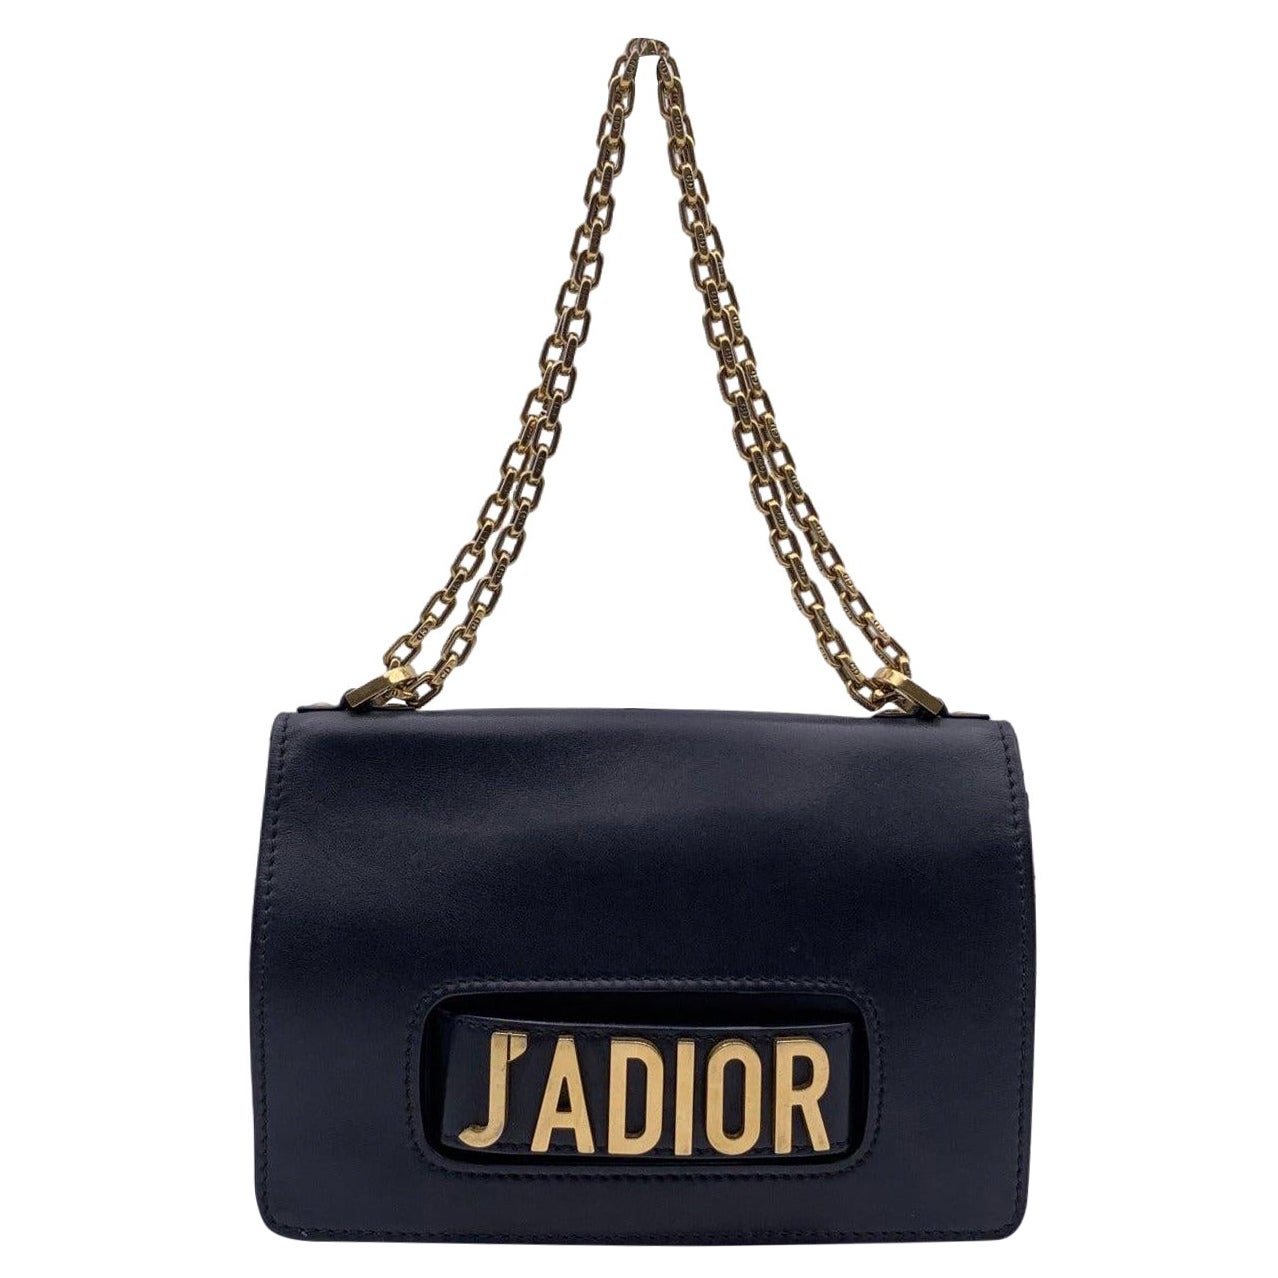 Christian Dior Black Leather J'Adior Shoulder Bag with Chain Strap